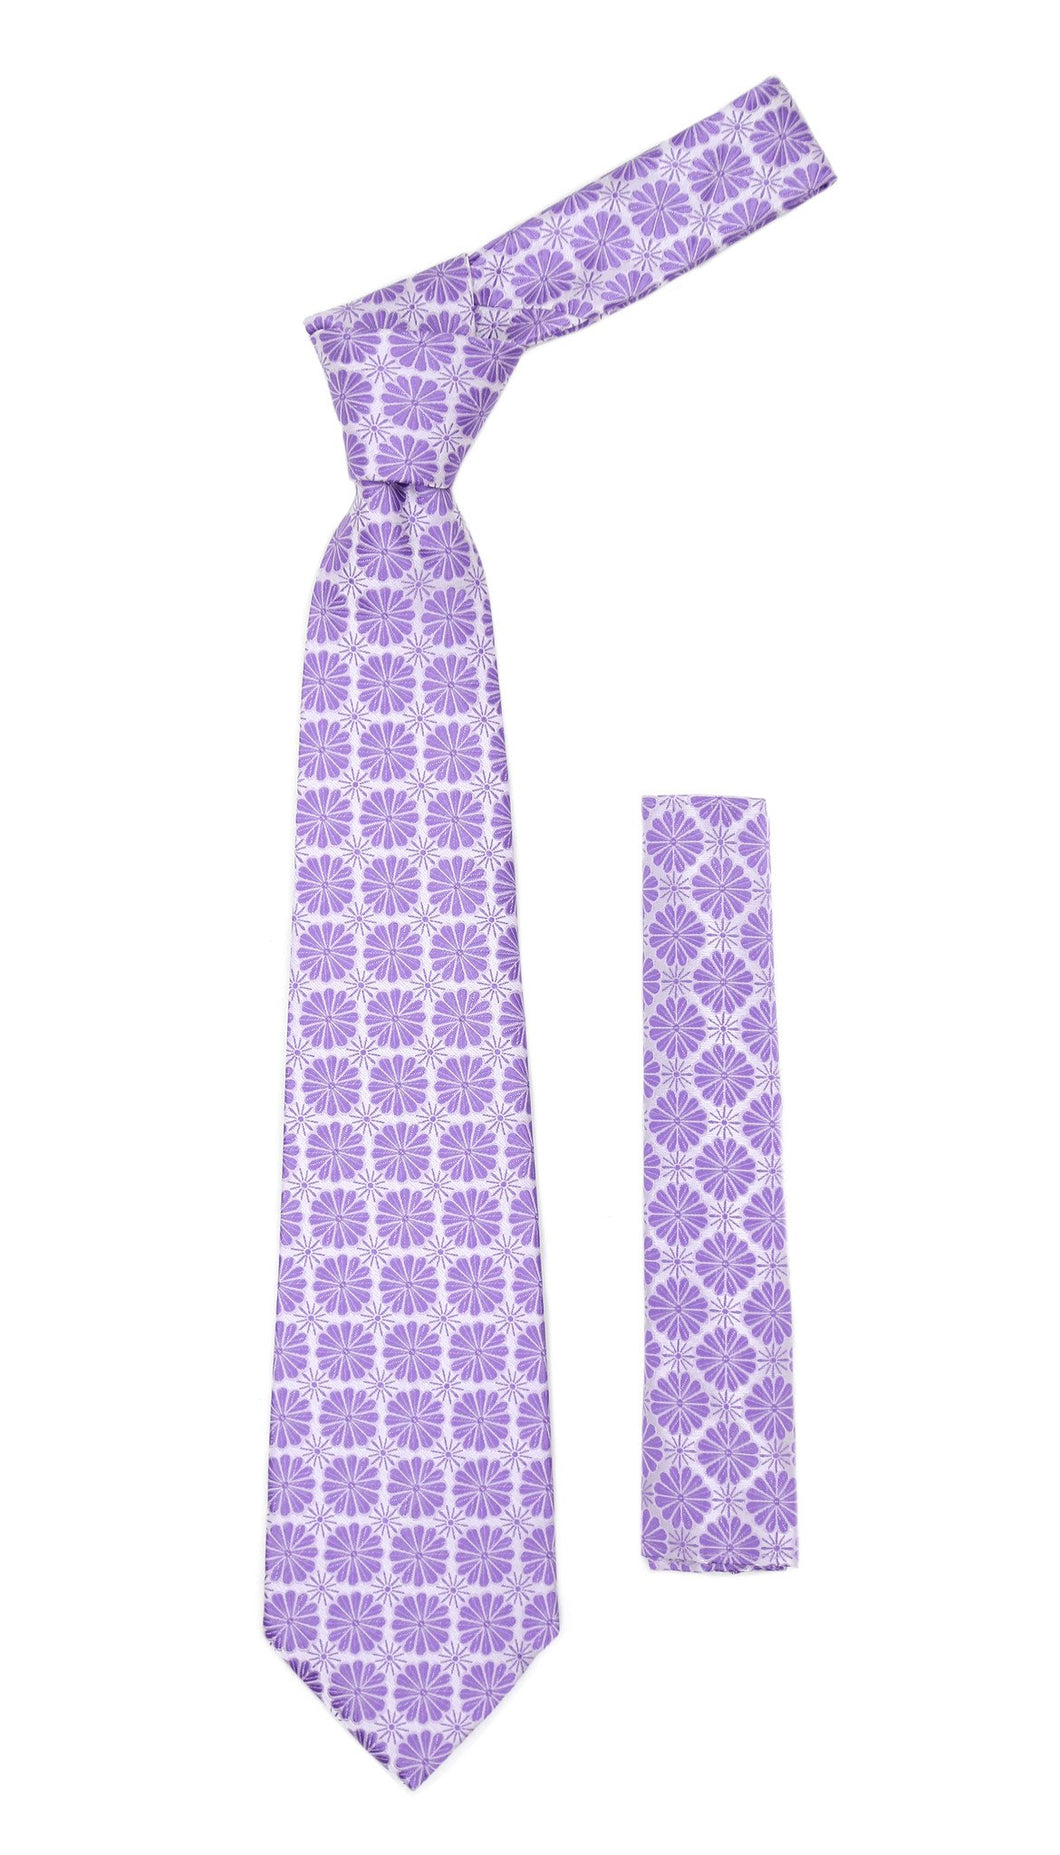 Floral Lavender Necktie with Handkderchief Set - Ferrecci USA 